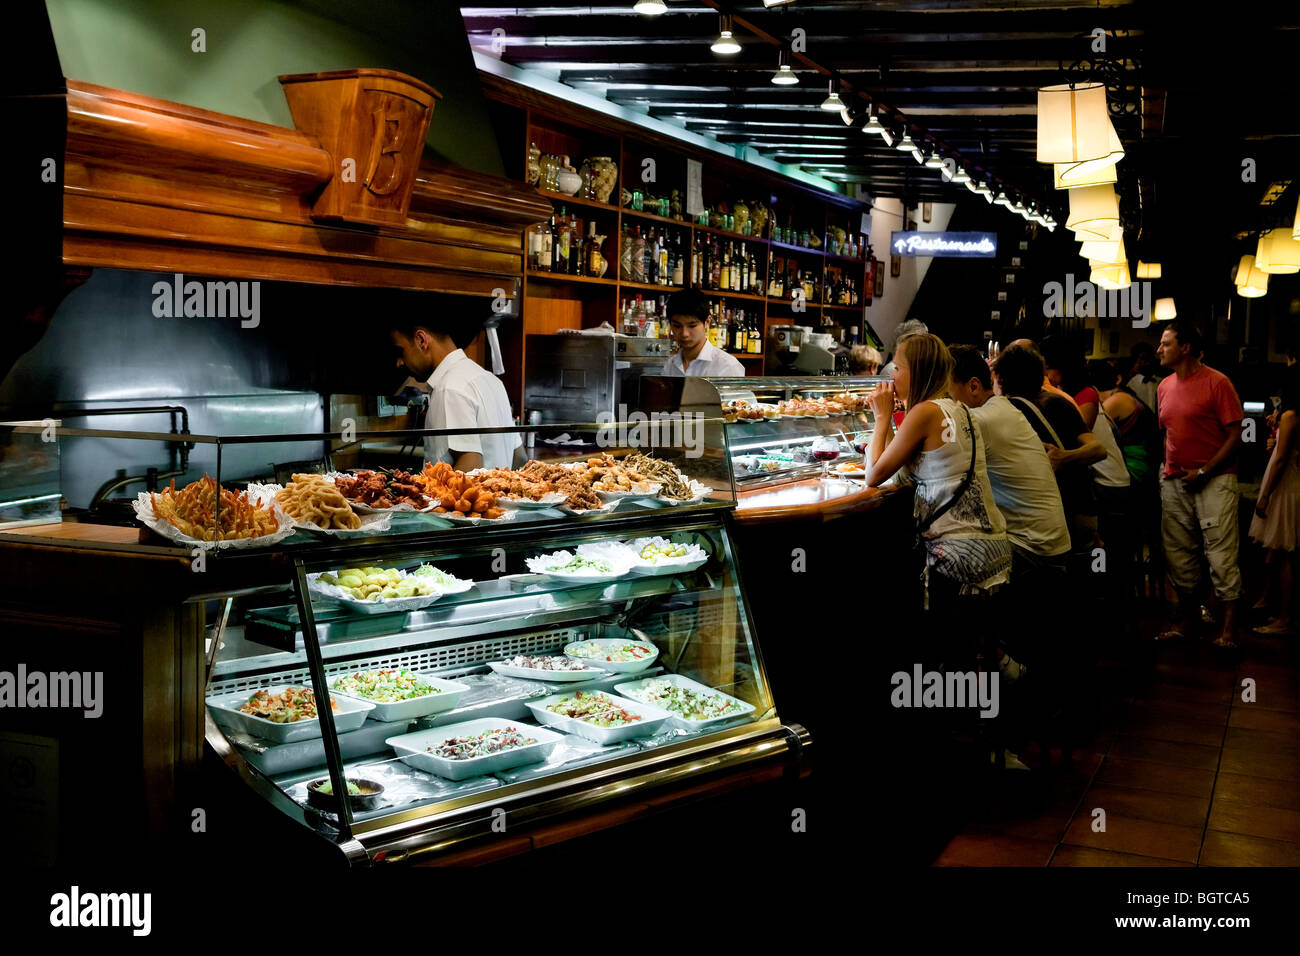 Barcelona - Tapas restaurant Stock Photo